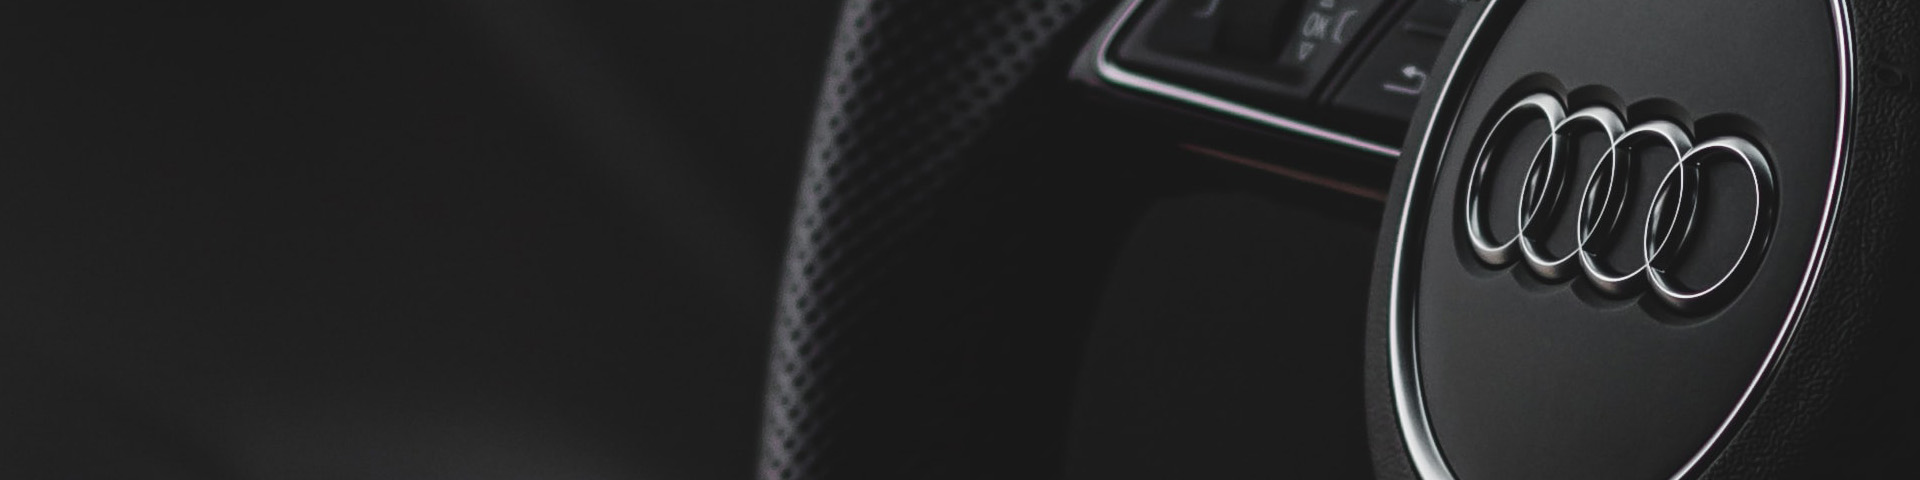 Audi Q8 Backdrop